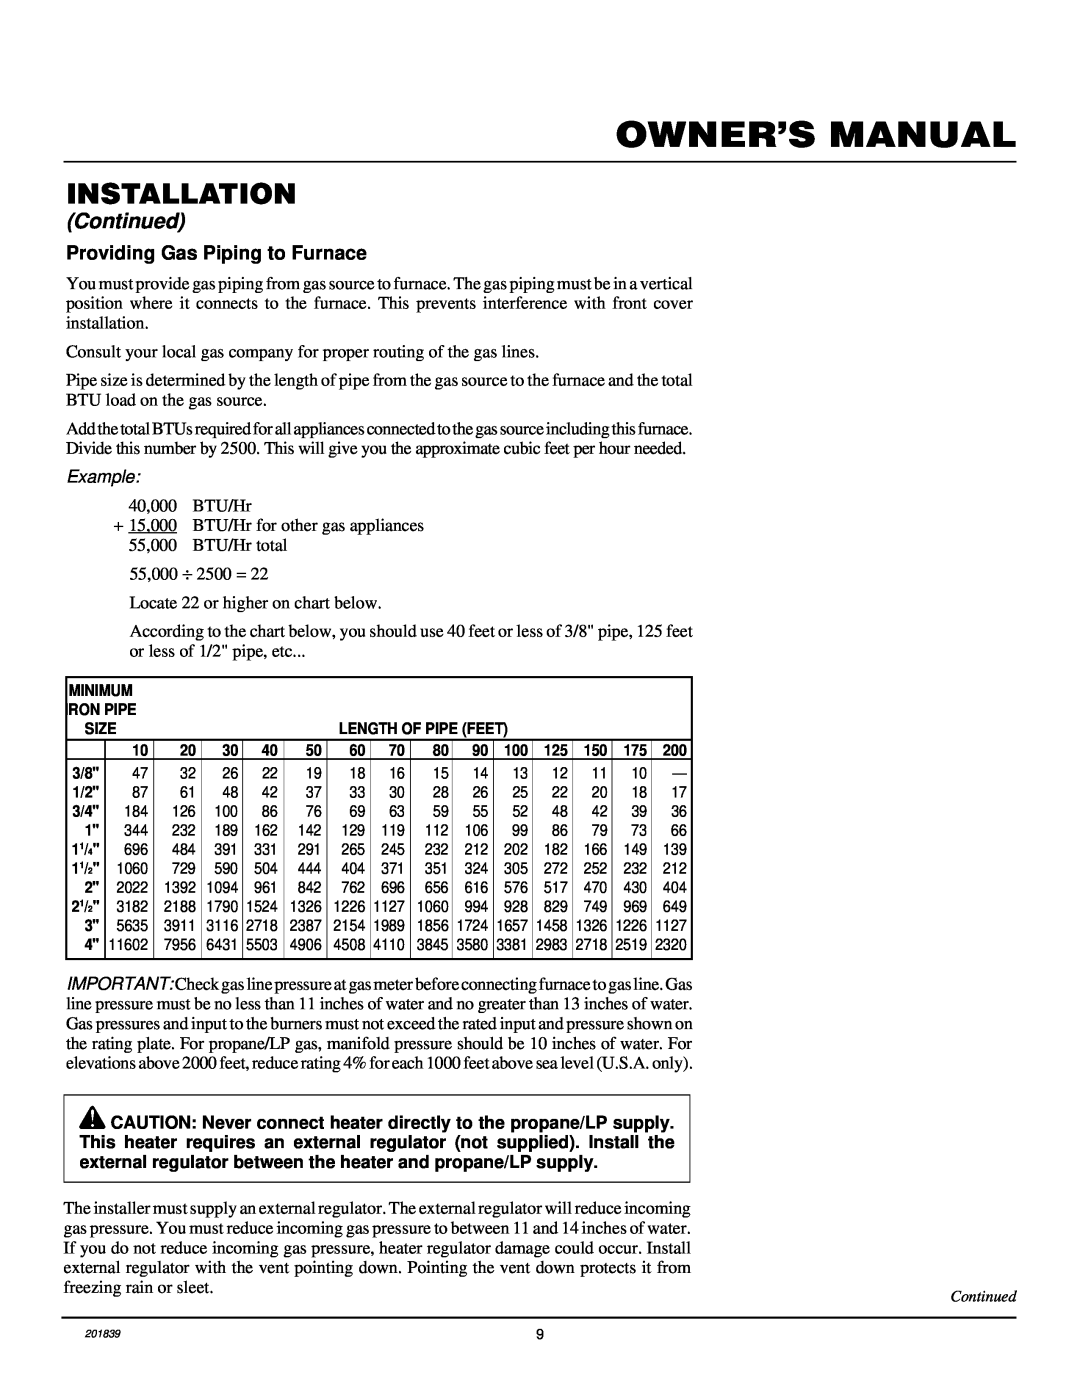 Desa DNV40PB, DNV25PB installation manual Installation, Continued, Providing Gas Piping to Furnace 